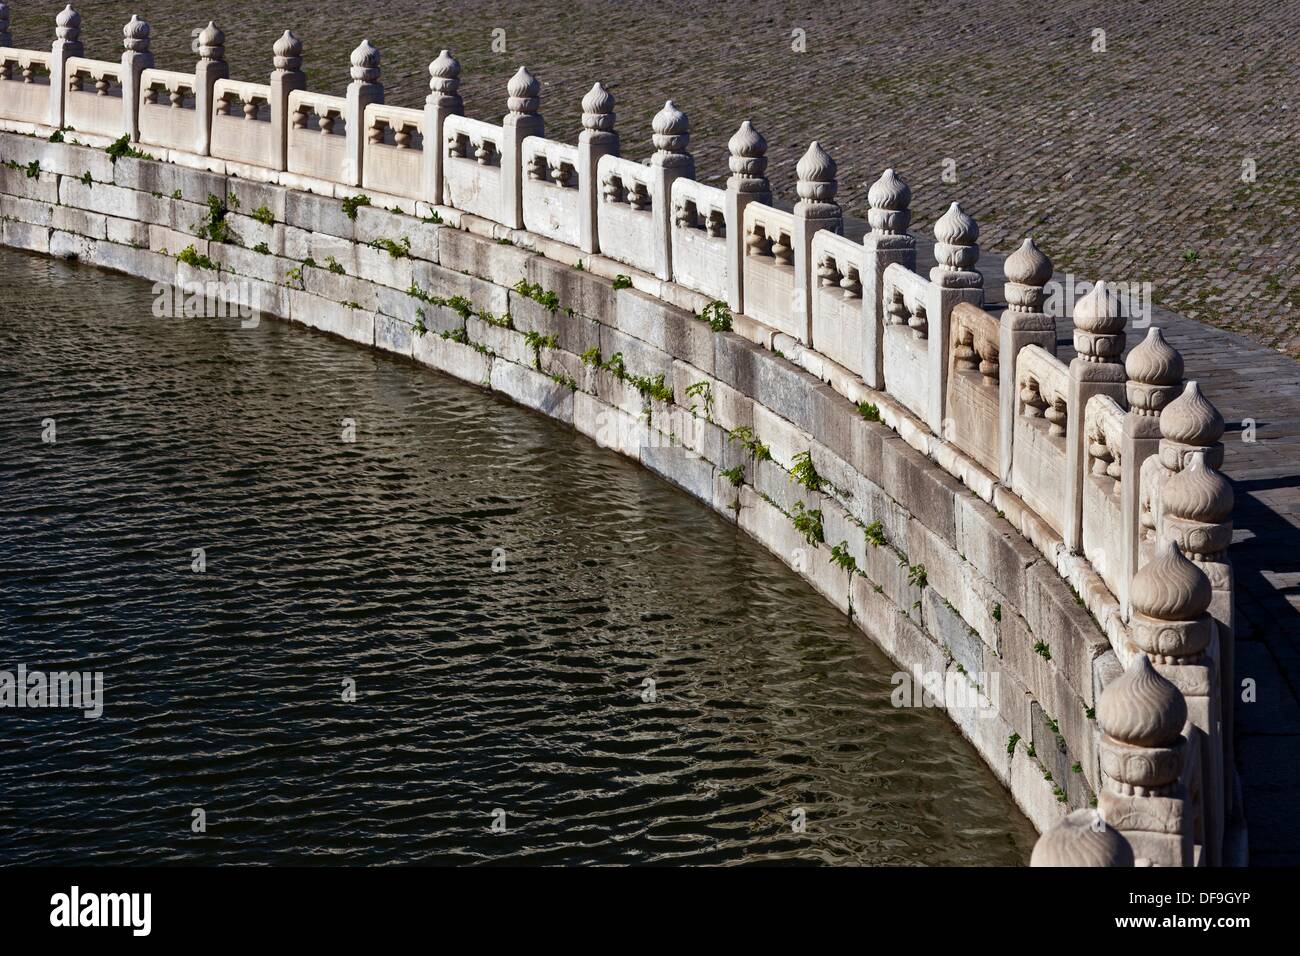 Ornate stone balustrade detail surrounding the Golden Stream / River in the Forbidden City, Beijing, China Stock Photo